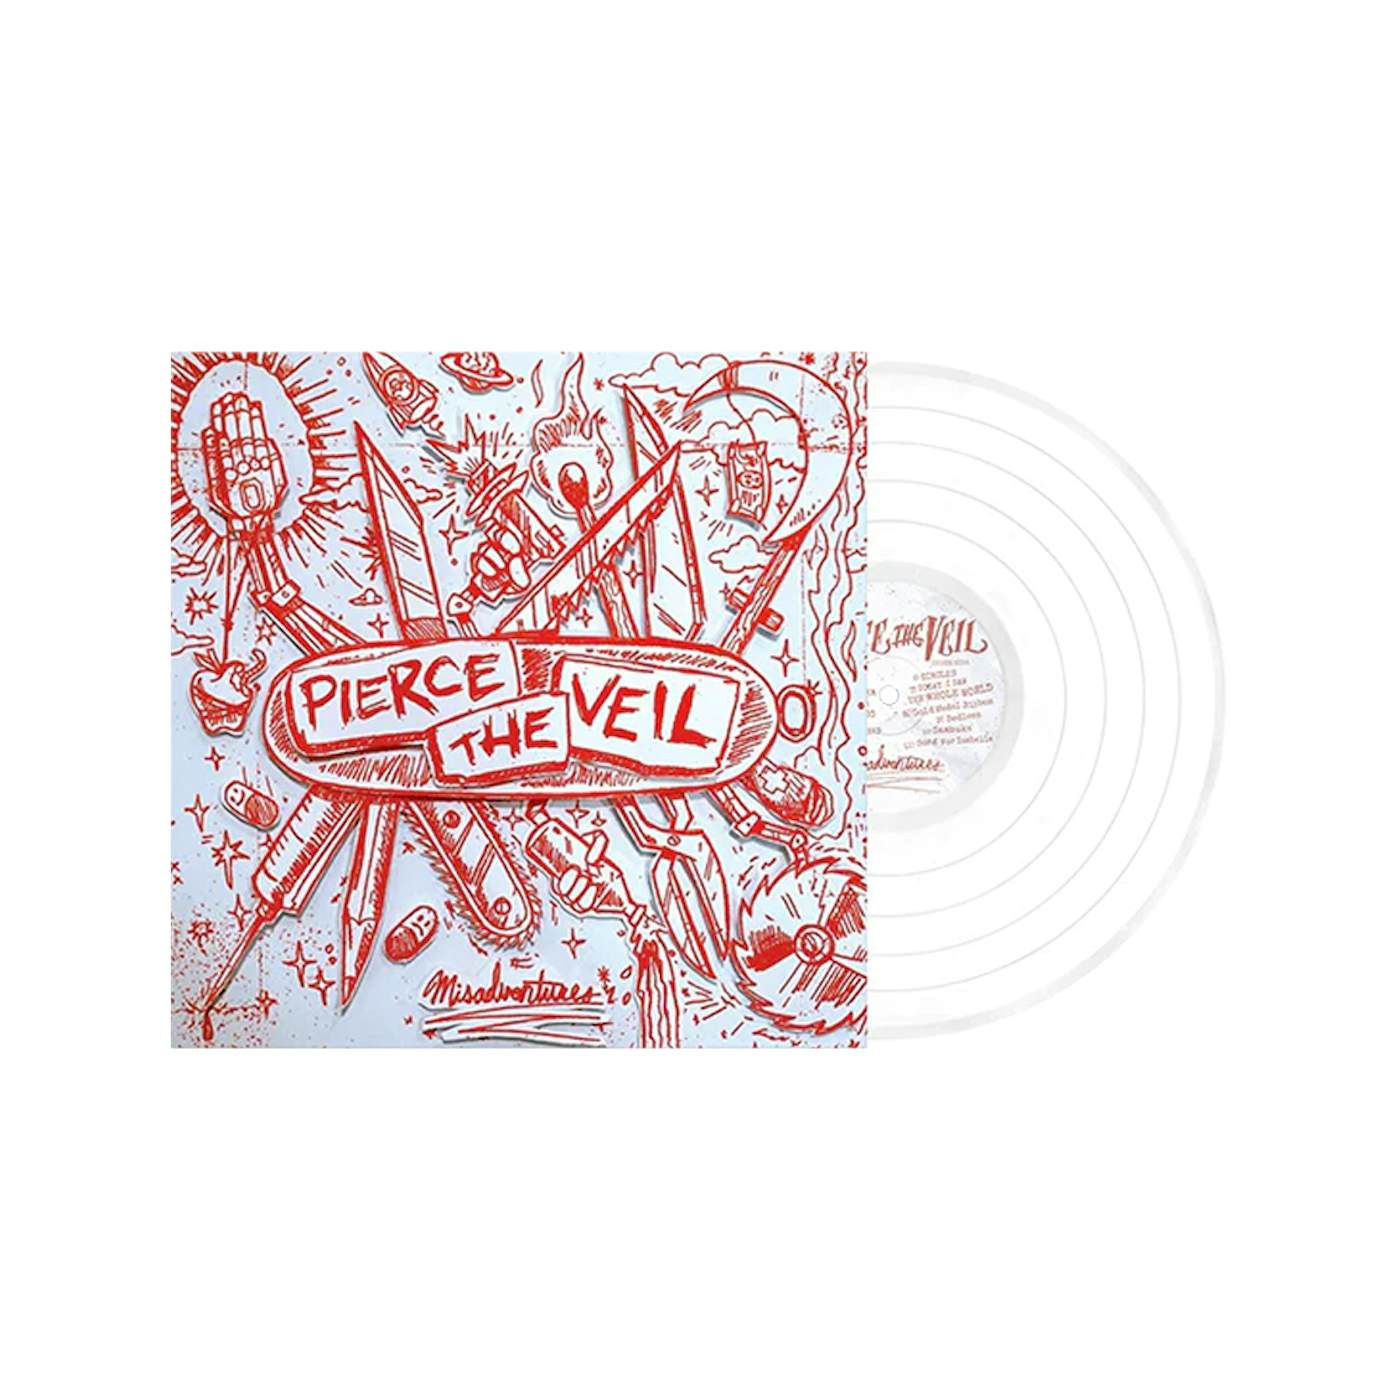 Pierce The Veil "Misadventures" Opaque White Vinyl